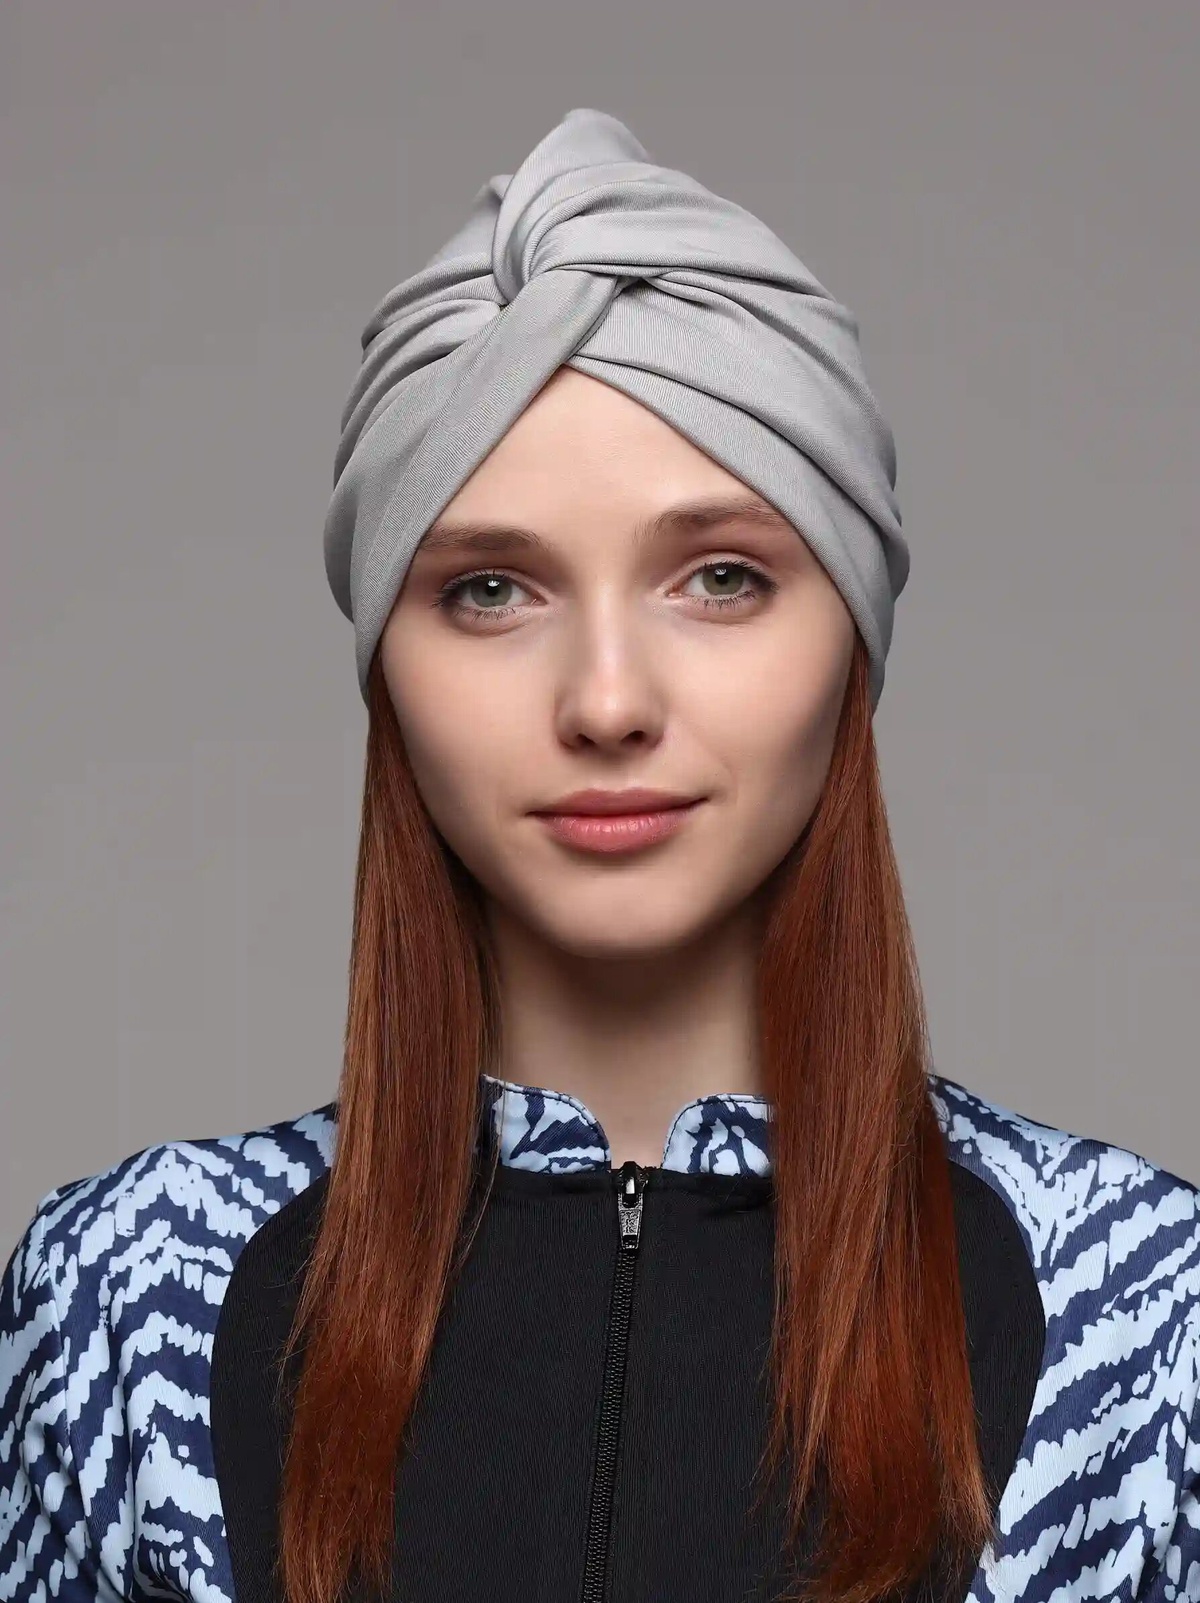 Make a Splash with Fashionable Swim Turbans and Headpieces